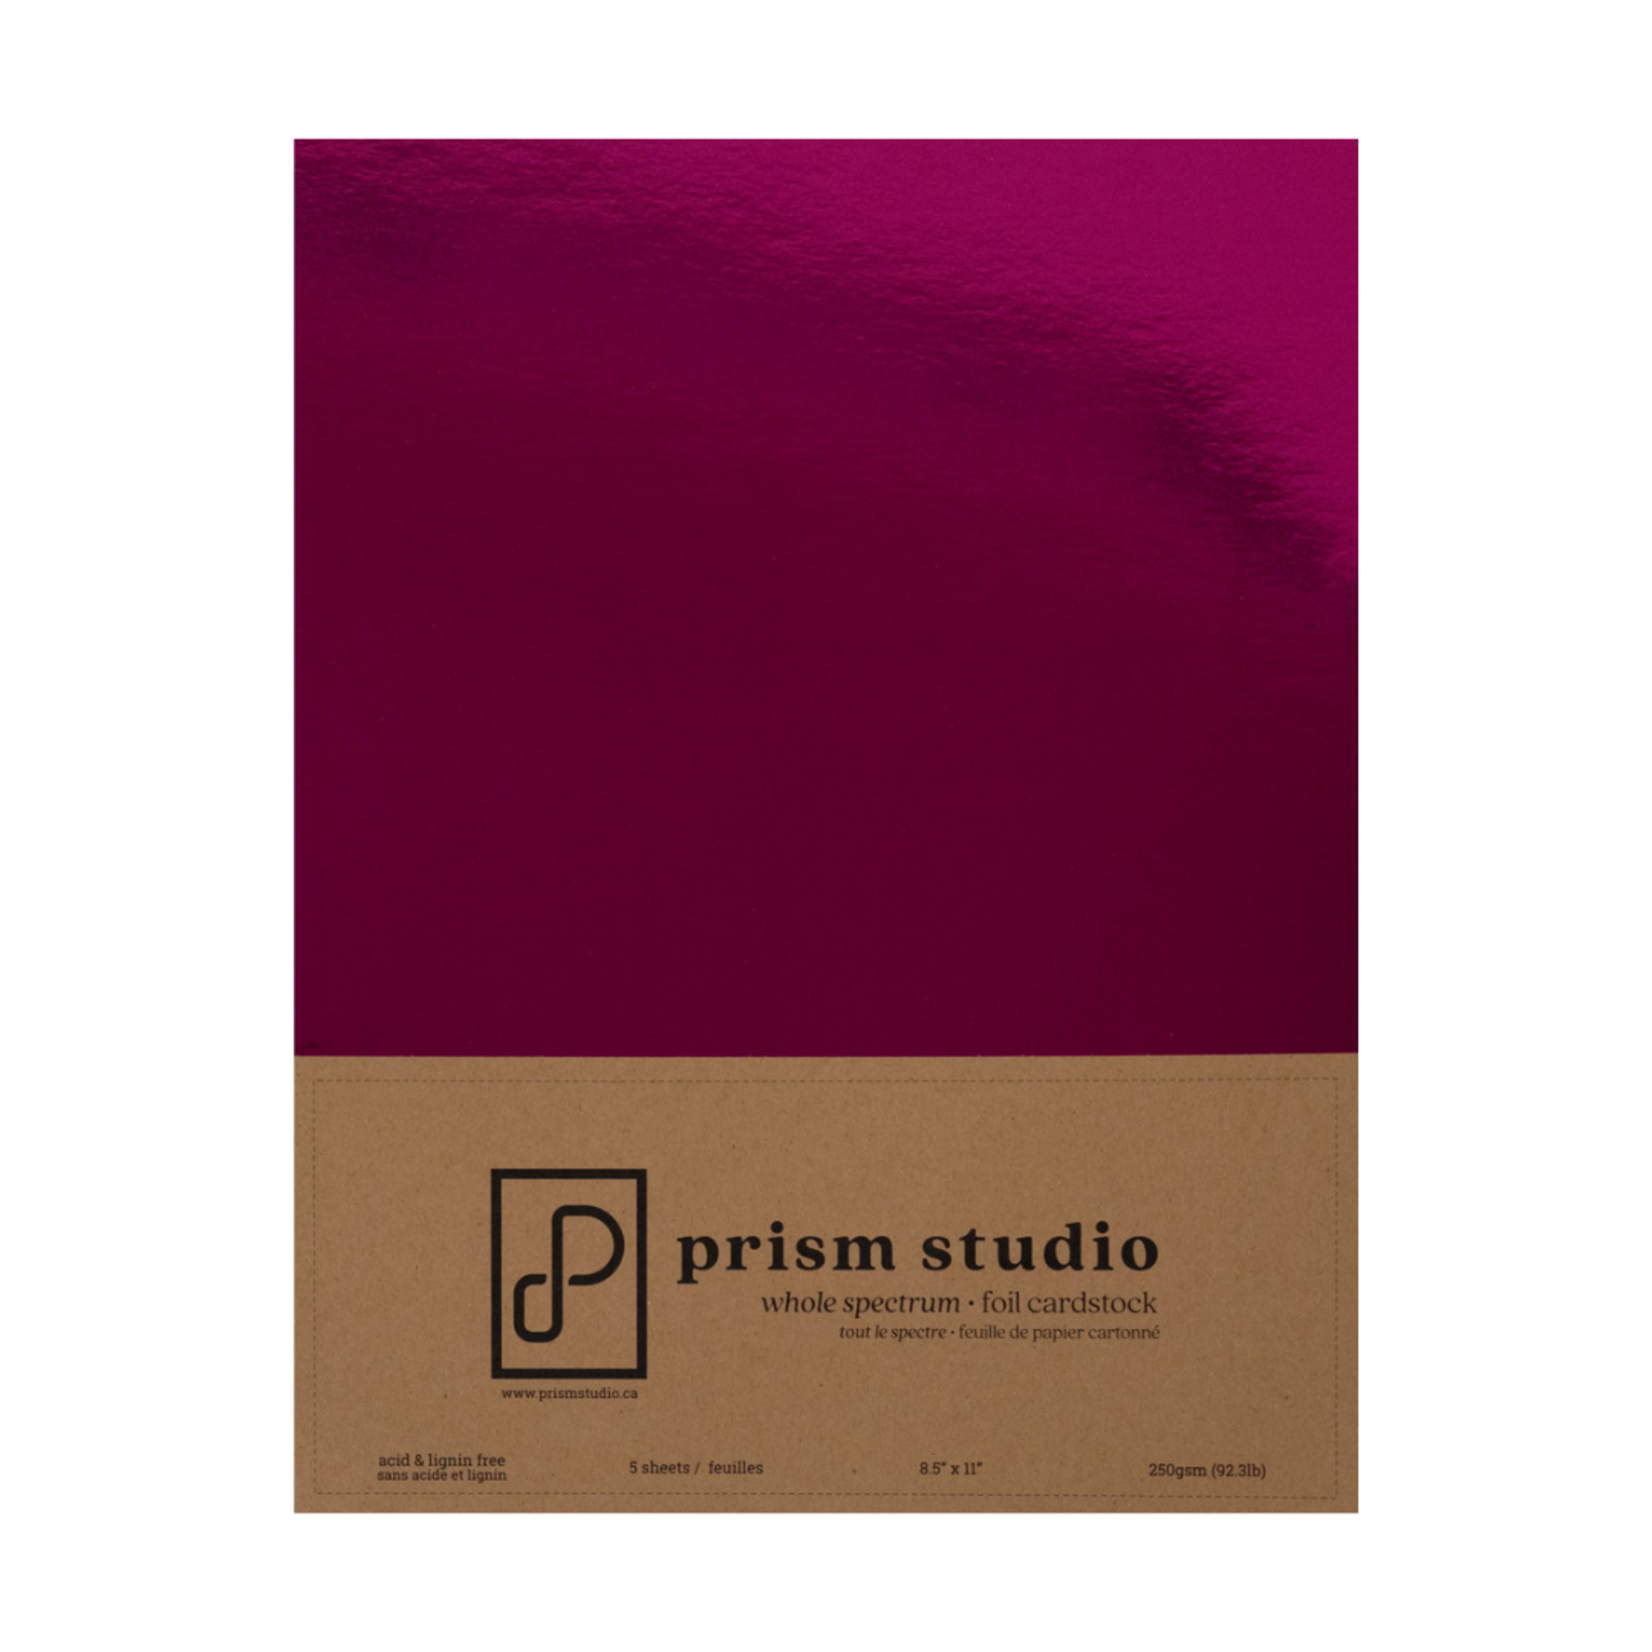 PRISM STUDIO PRISM STUDIO WHOLE SPECTRUM FOIL CARDSTOCK 8.5X11 PINK TOURMALINE